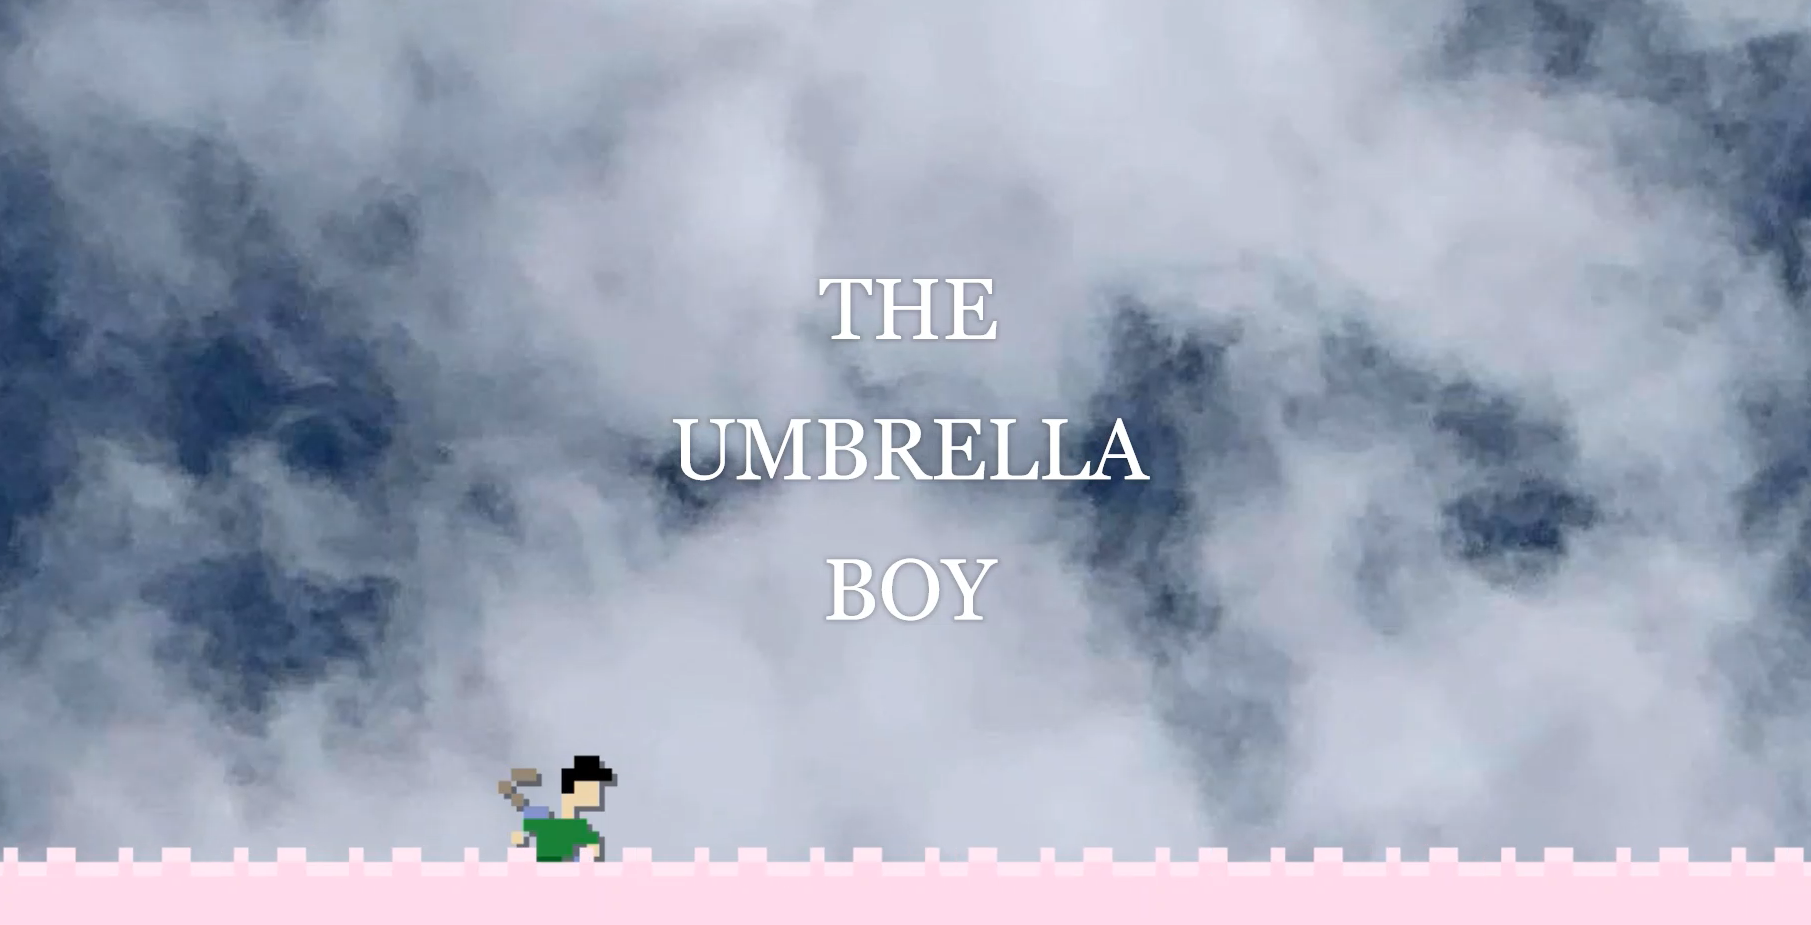 THE UMBRELLA BOY